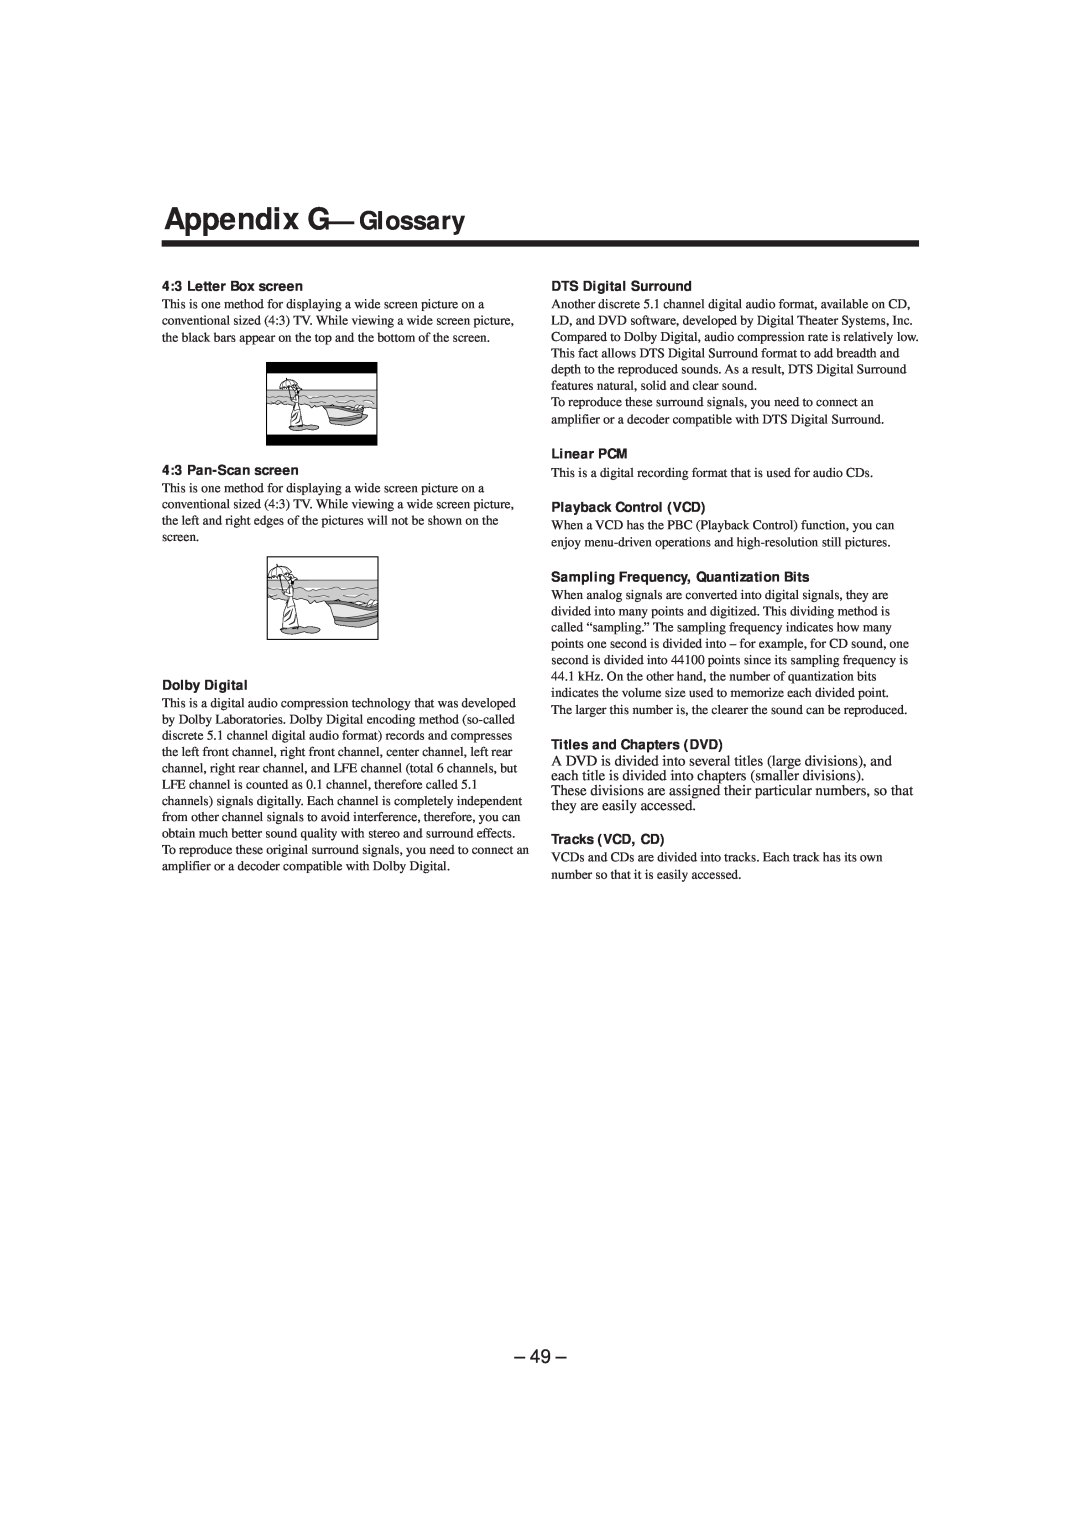 JVC MX-DVA9 manual Appendix G—Glossary, 4 3 Letter Box screen, 4:3 Pan-Scanscreen, DTS Digital Surround, Linear PCM 